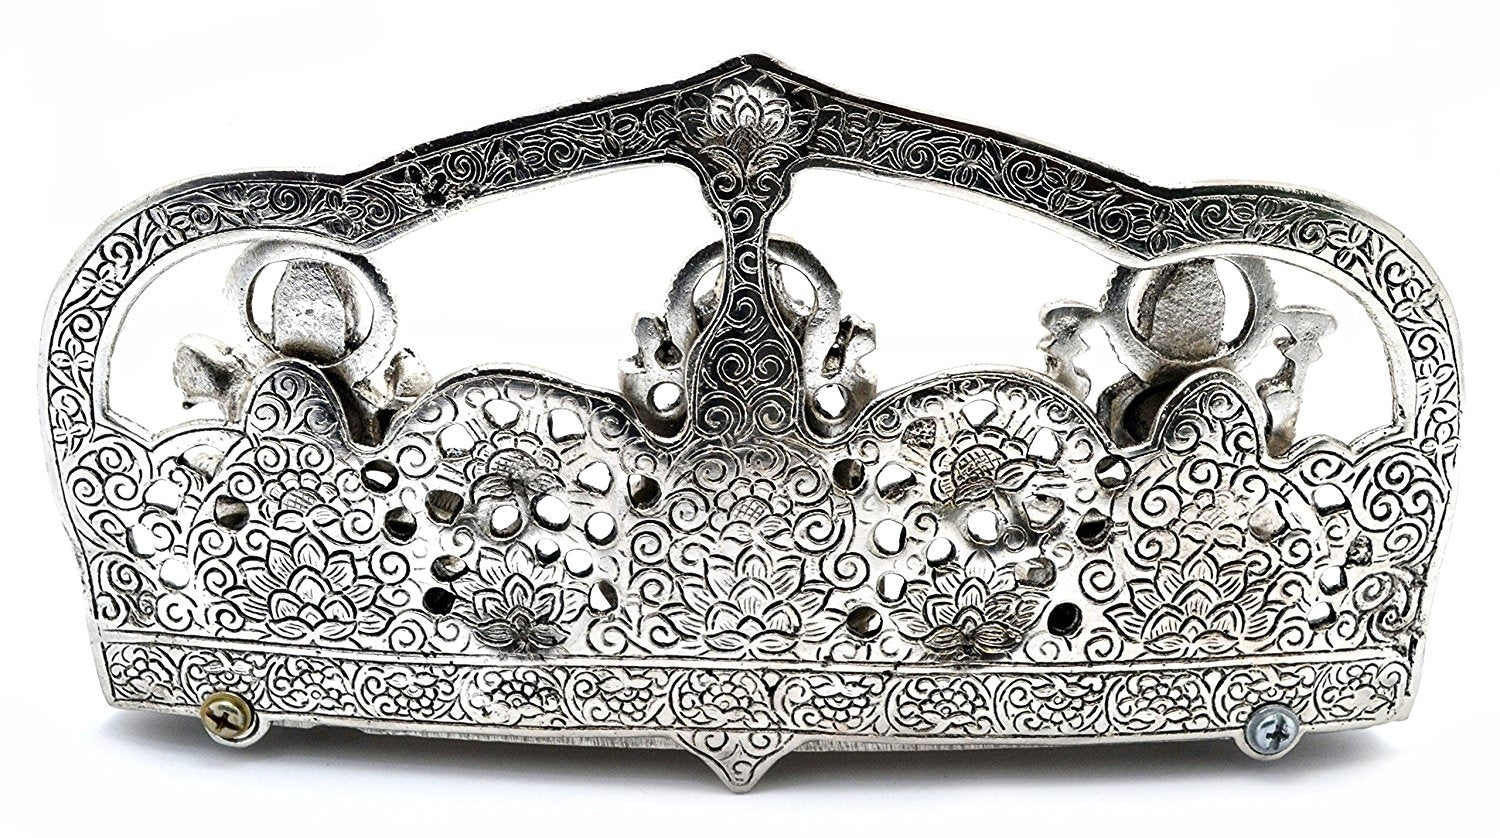 Silver Metal laxmi ganesha saraswati Shining Religious Decorative Showpiece 2